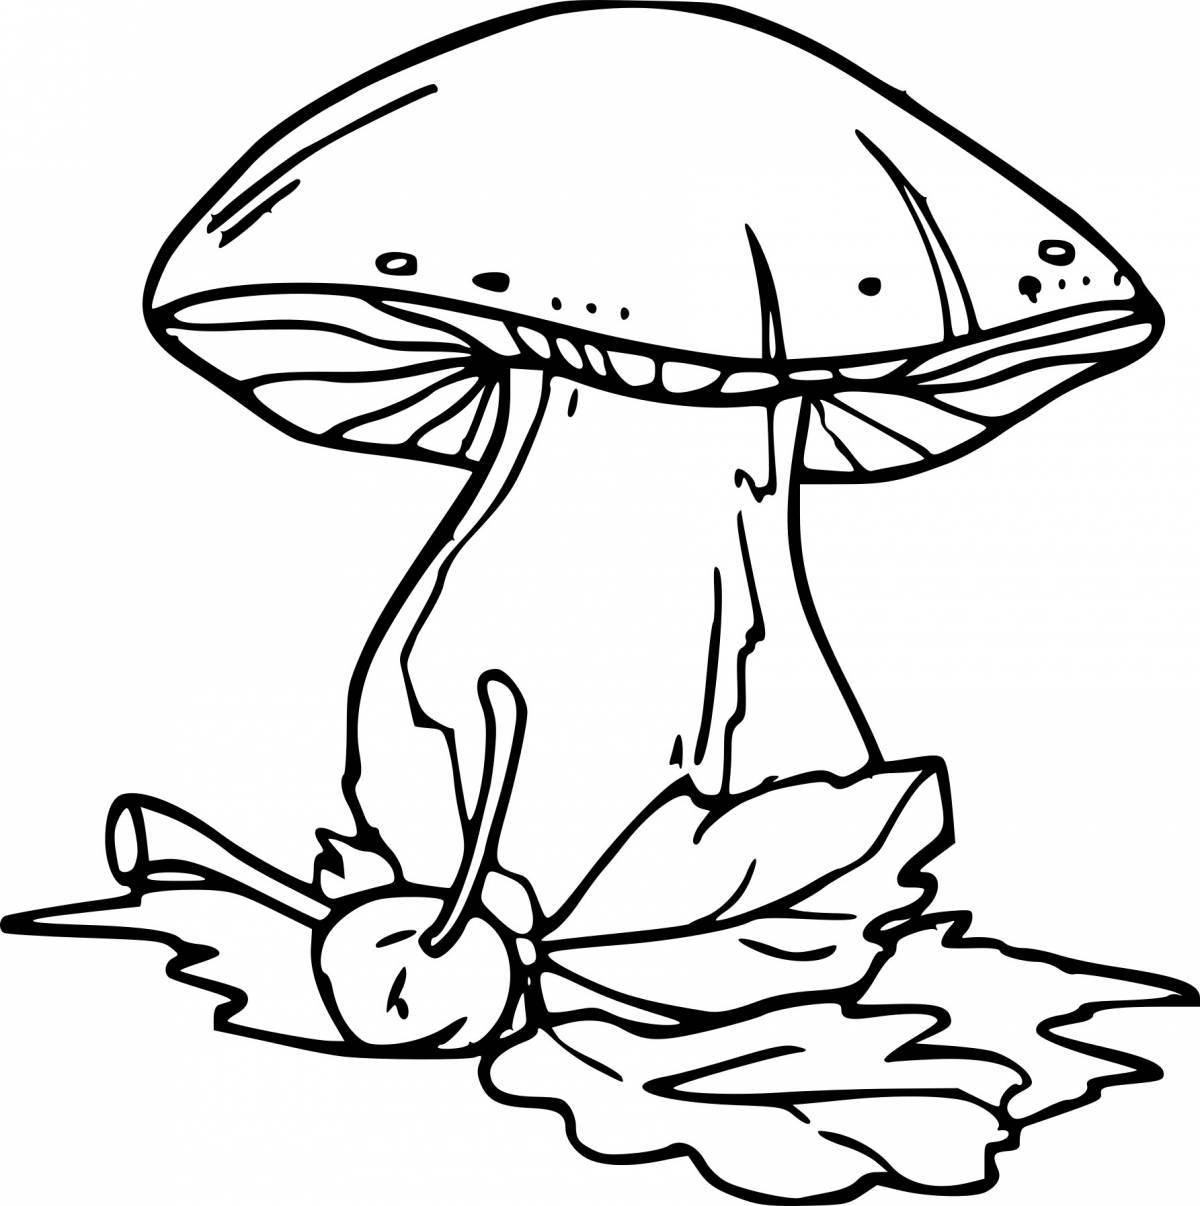 Adorable porcini mushroom coloring page